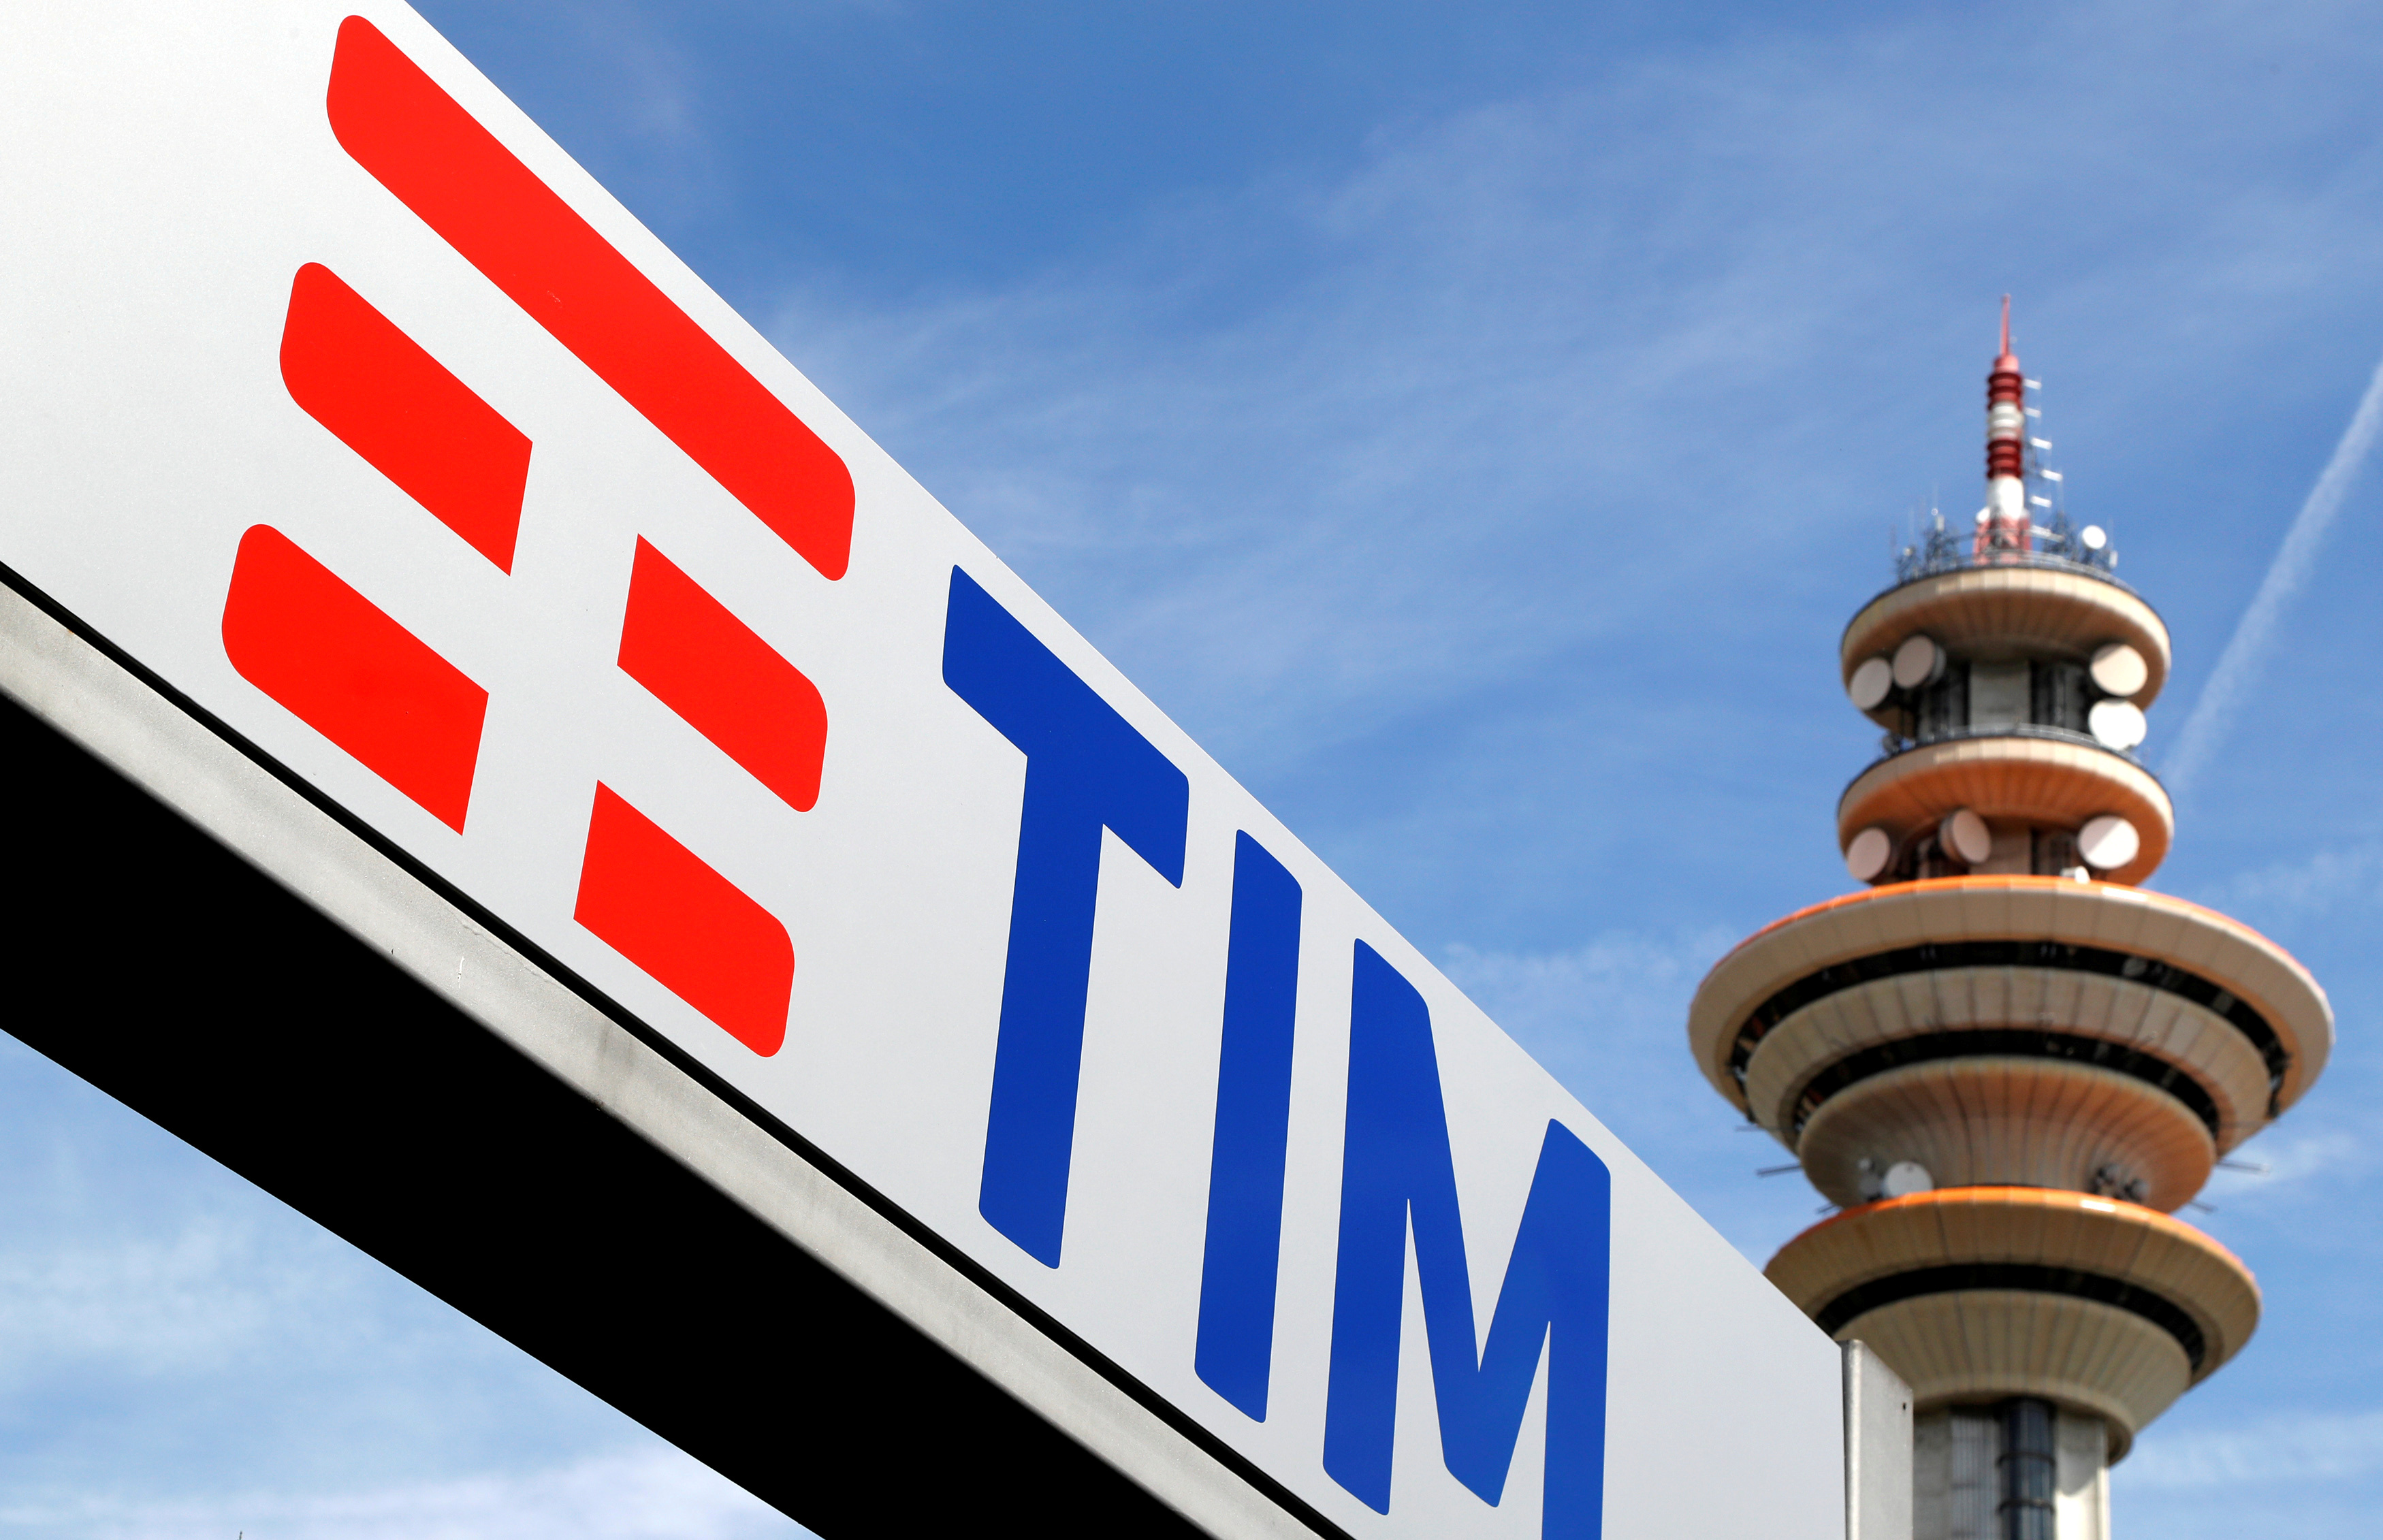 Telecom Italia's logo is displayed in Milan